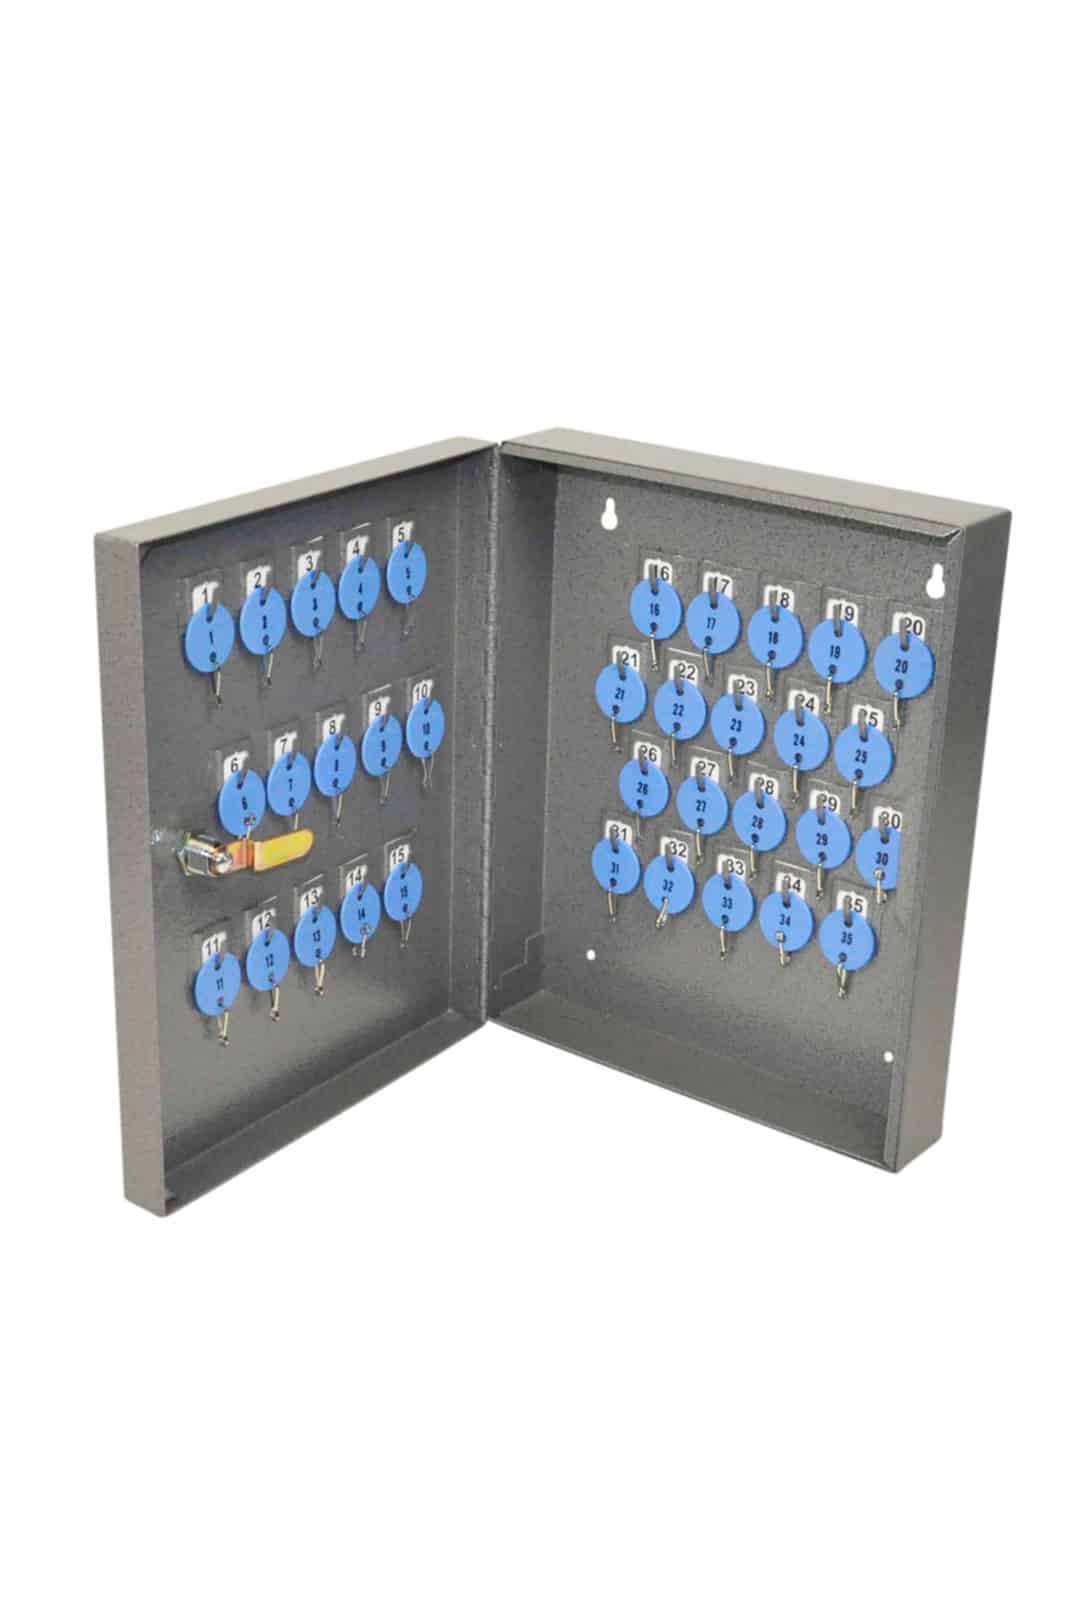 Silver Basics Key Lock 24 Position Key Cabinet lock Box 